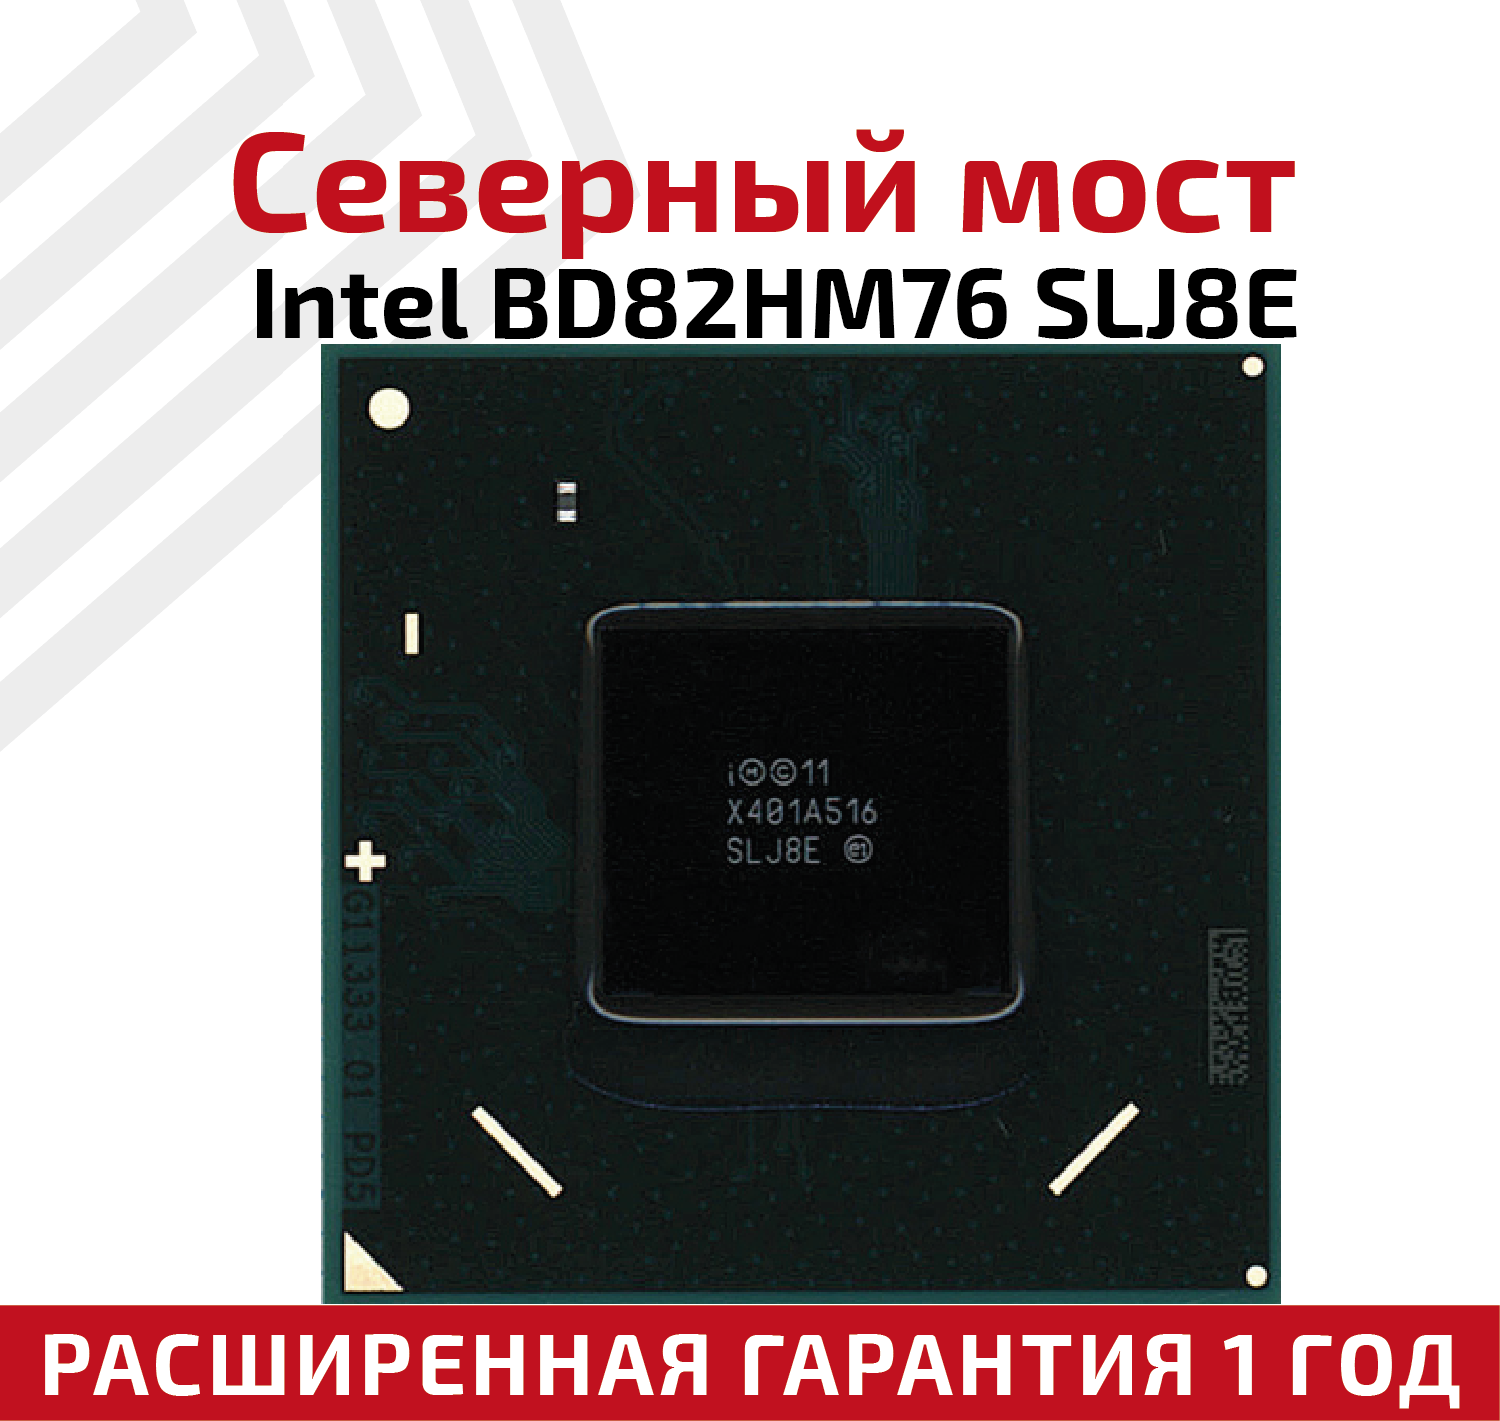 Северный мост Intel BD82HM76 SLJ8E